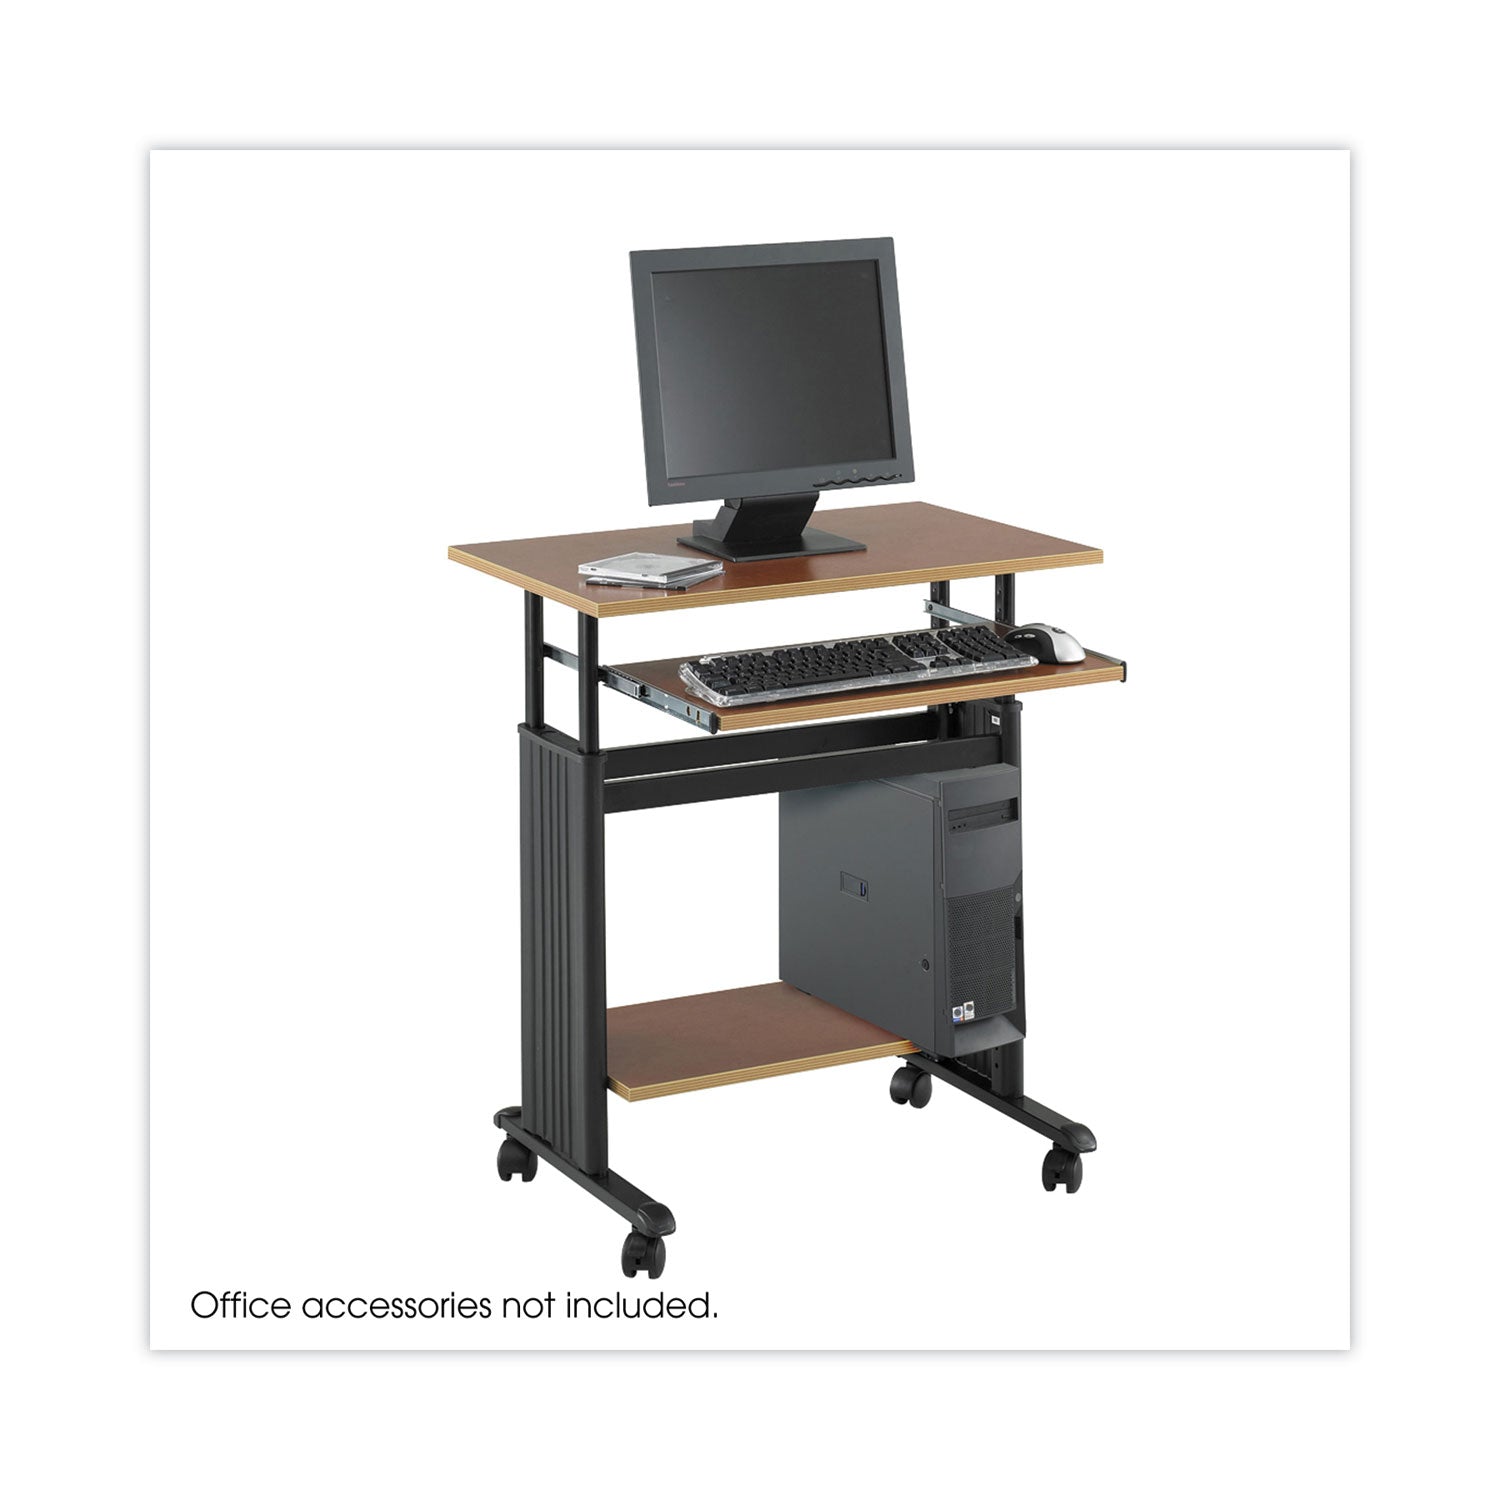 Muv 28" Adjustable-Height Desk, 29.5" x 22" x 29" to 34", Cherry/Black - 